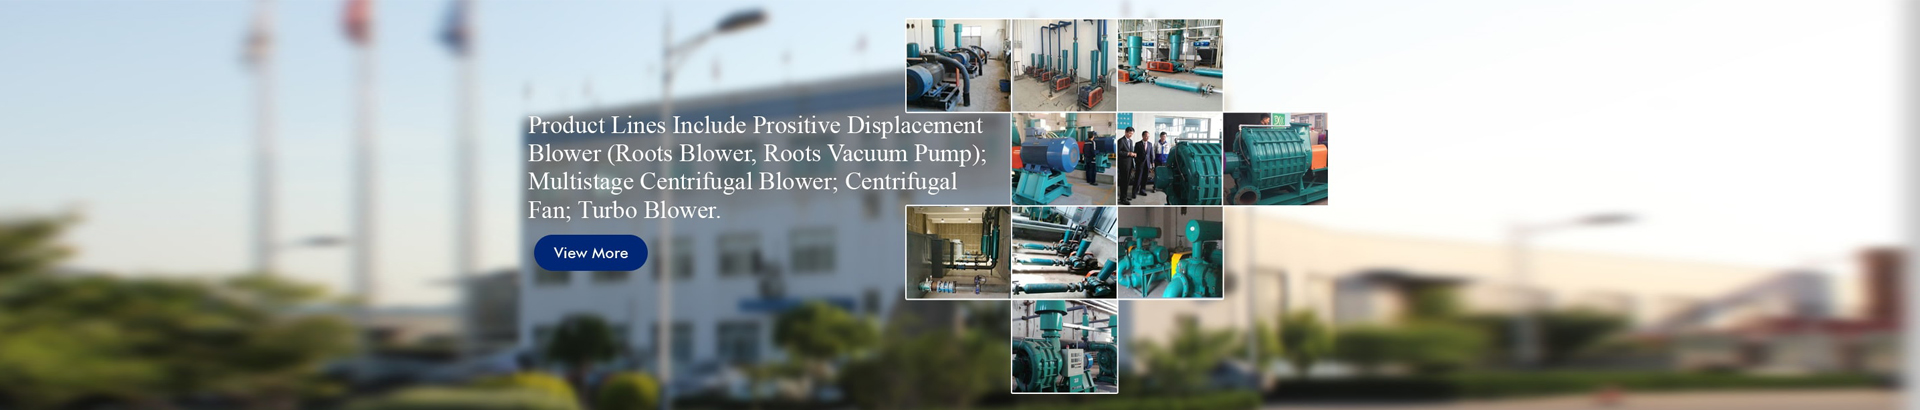 roots blower|centrifugal blower fan|tuber blower